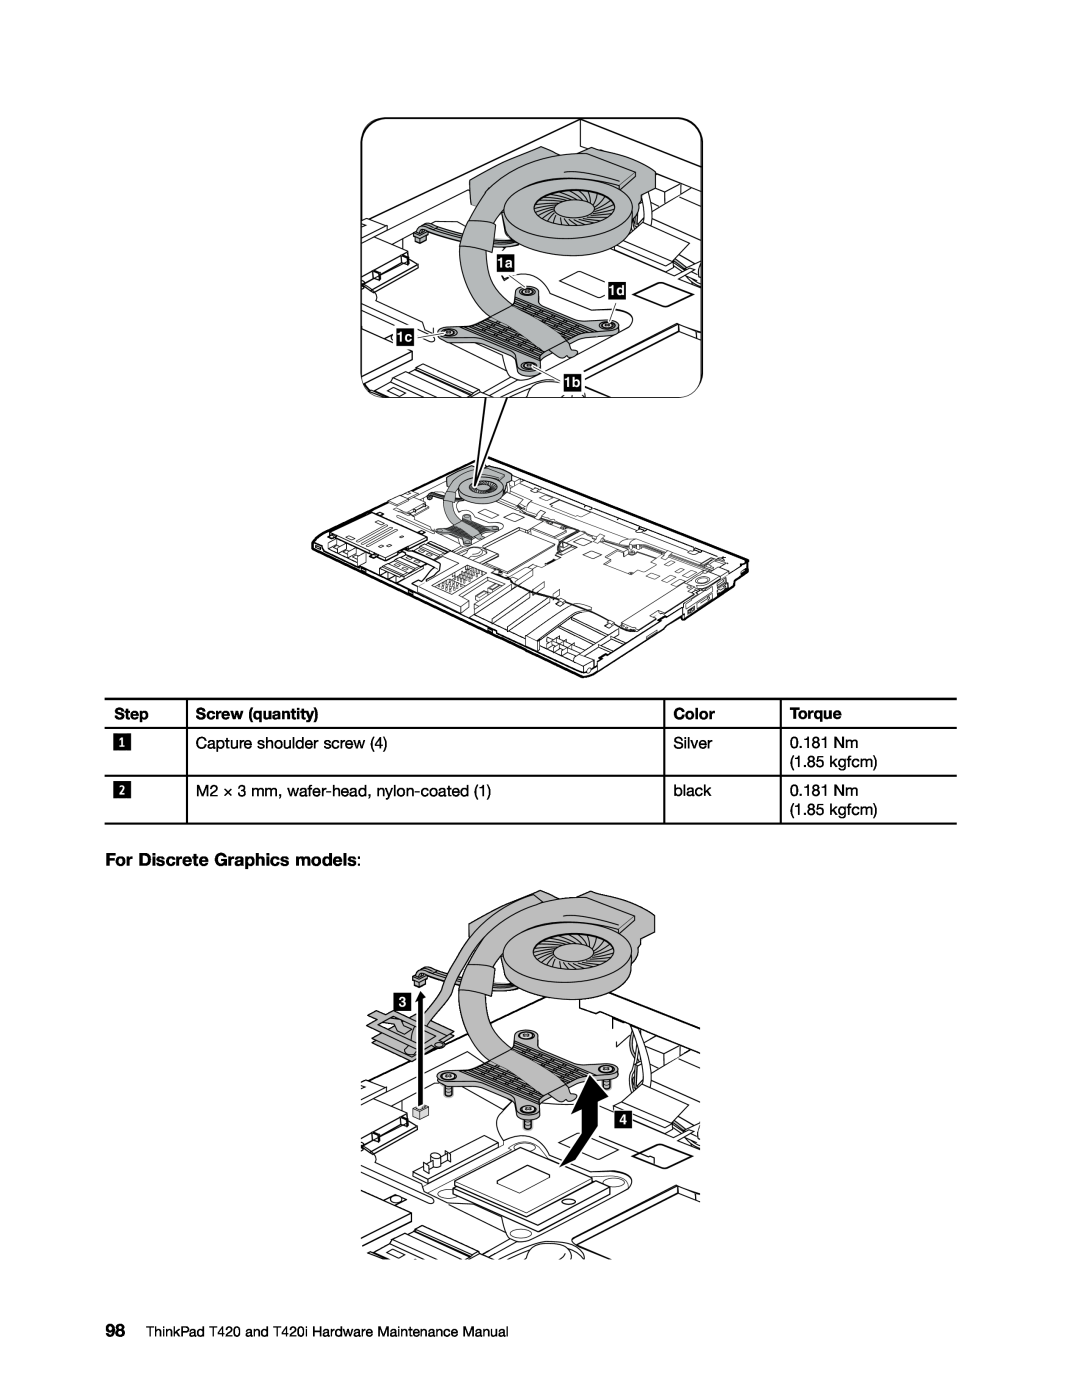 Lenovo manual For Discrete Graphics models, 1a 1d 1c 1b, ThinkPad T420 and T420i Hardware Maintenance Manual 